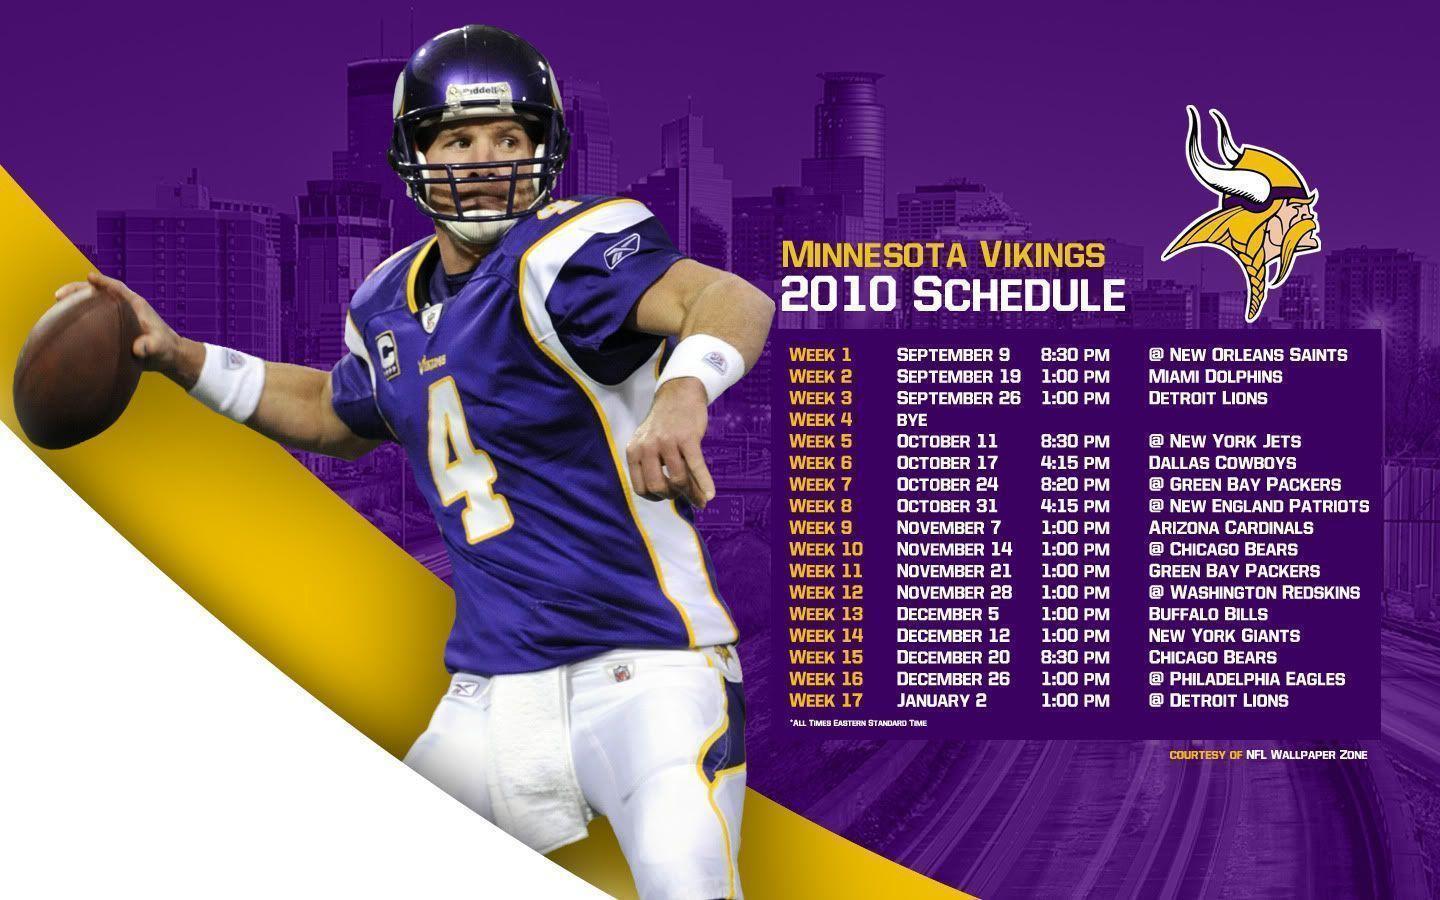 NFL Wallpaper Zone: 2010 Minnesota Vikings Schedule Wallpaper